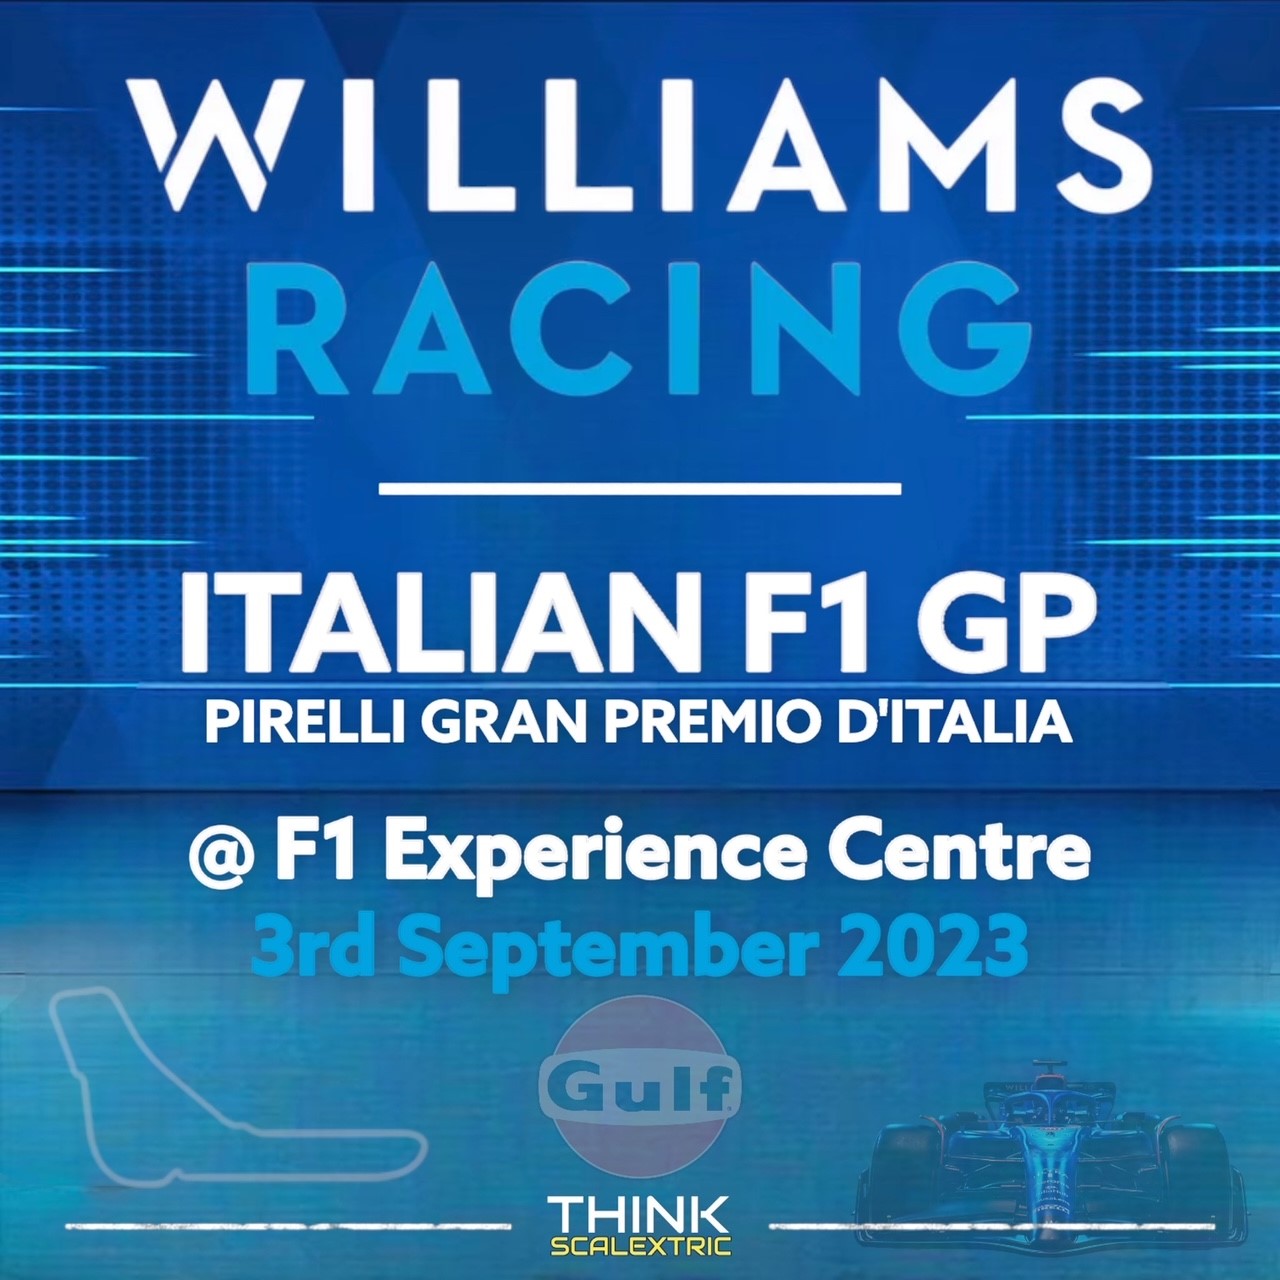 williams f1 racing race day hospitality italy f1 2023 gp